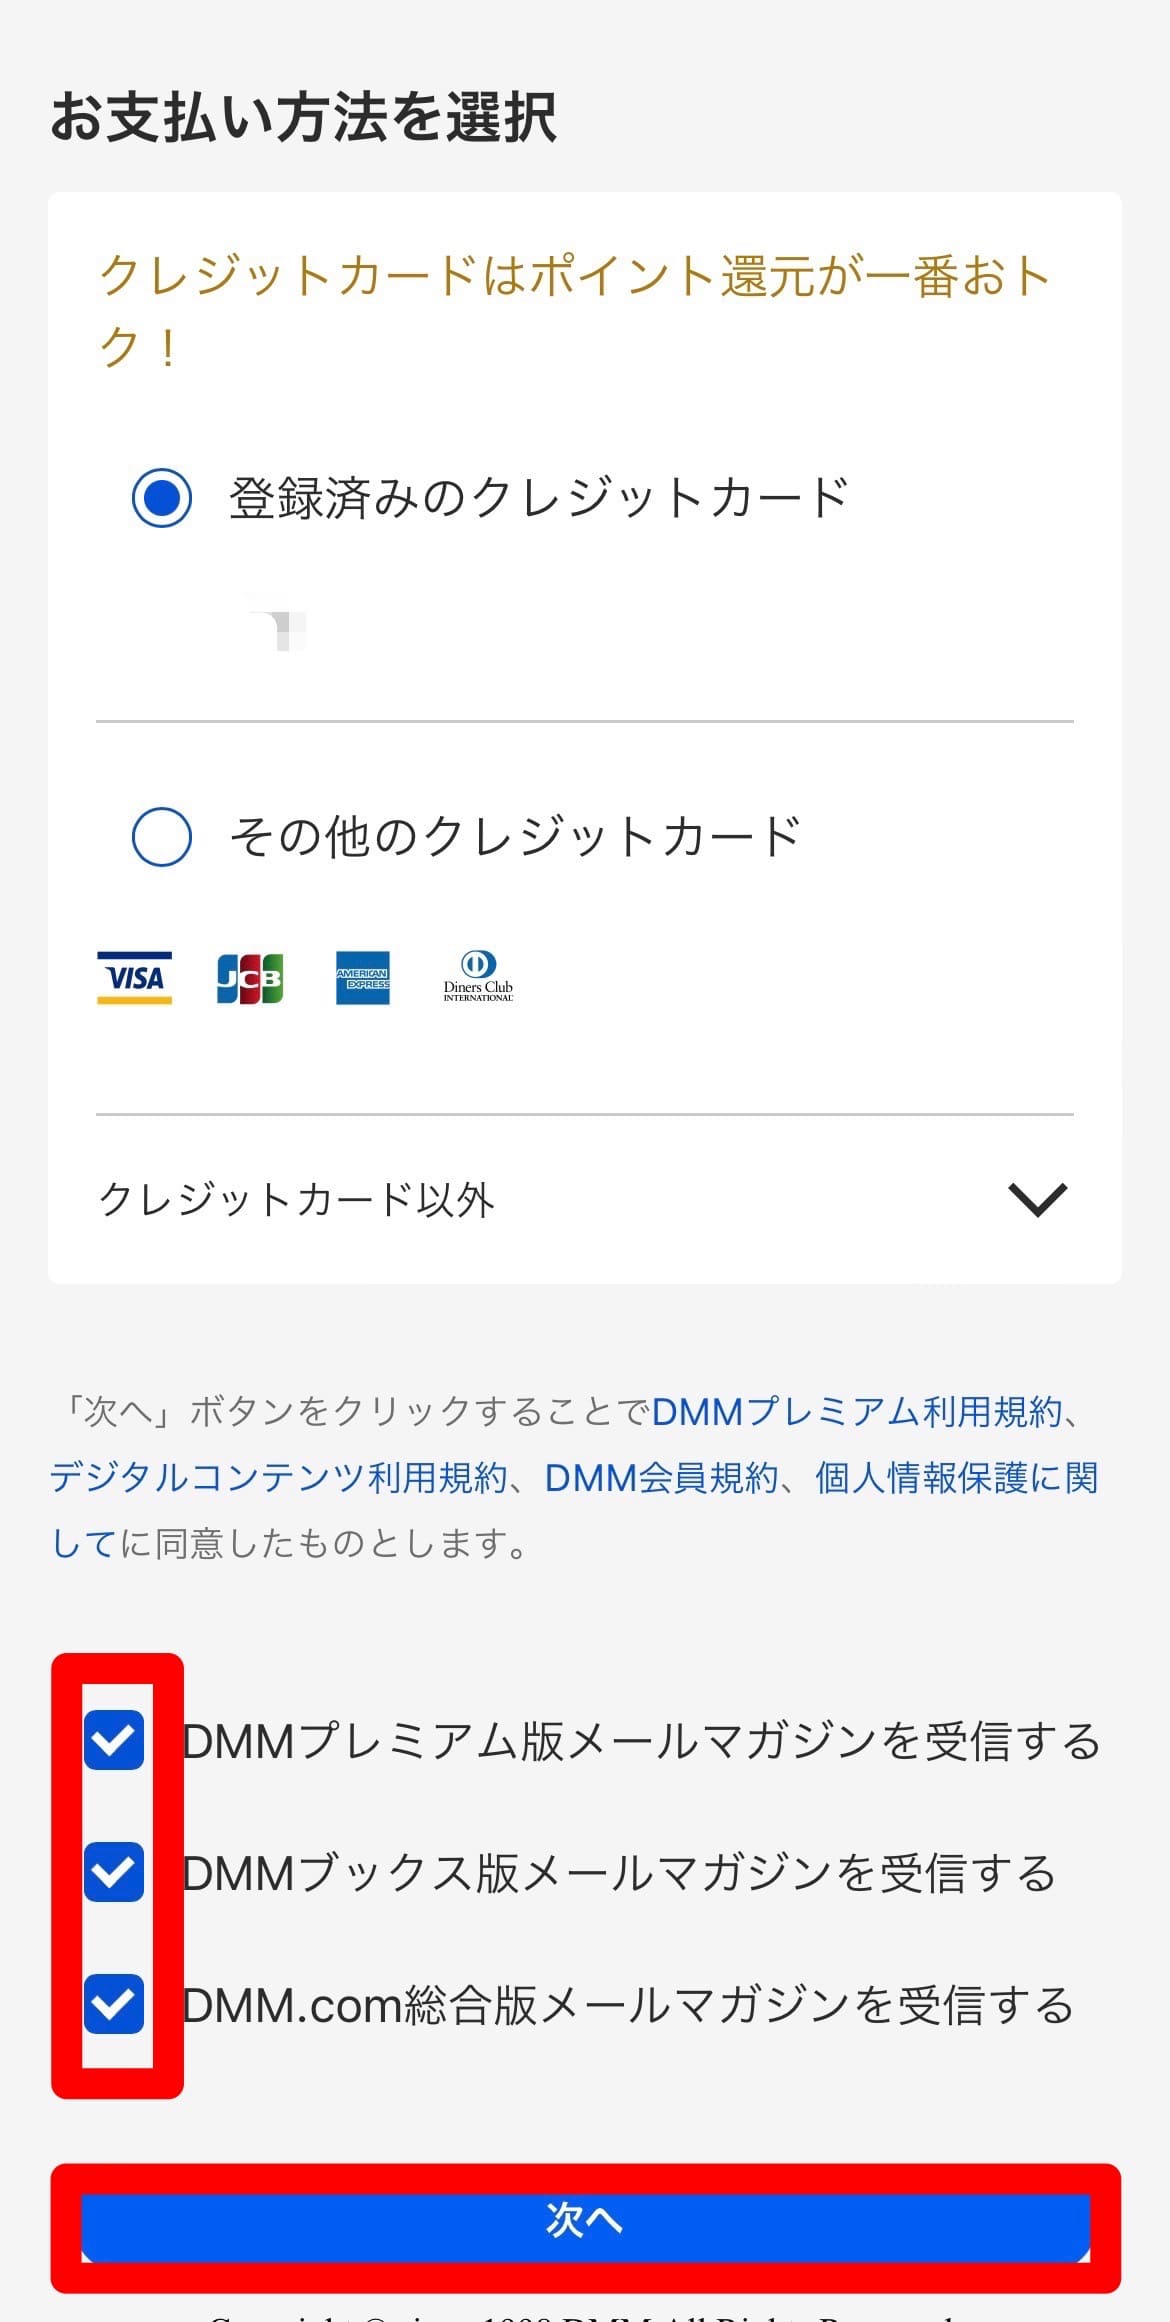 DMMTV 登録方法